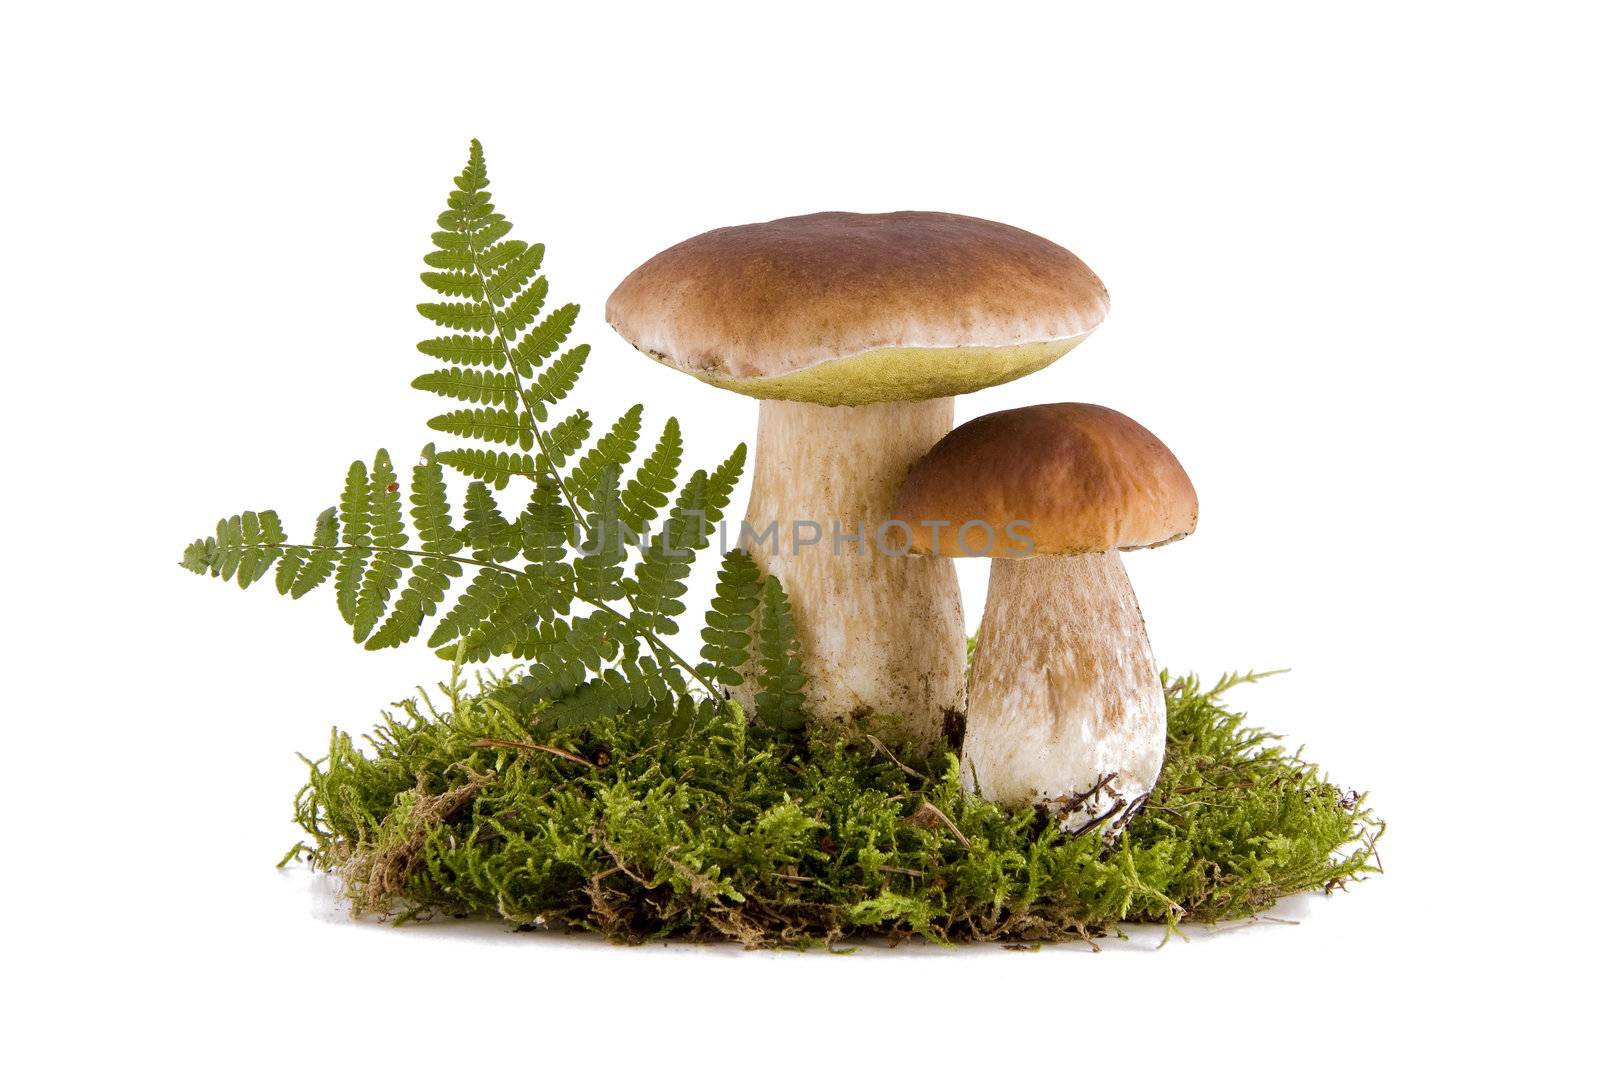 Two porcini mushrooms by Gbuglok